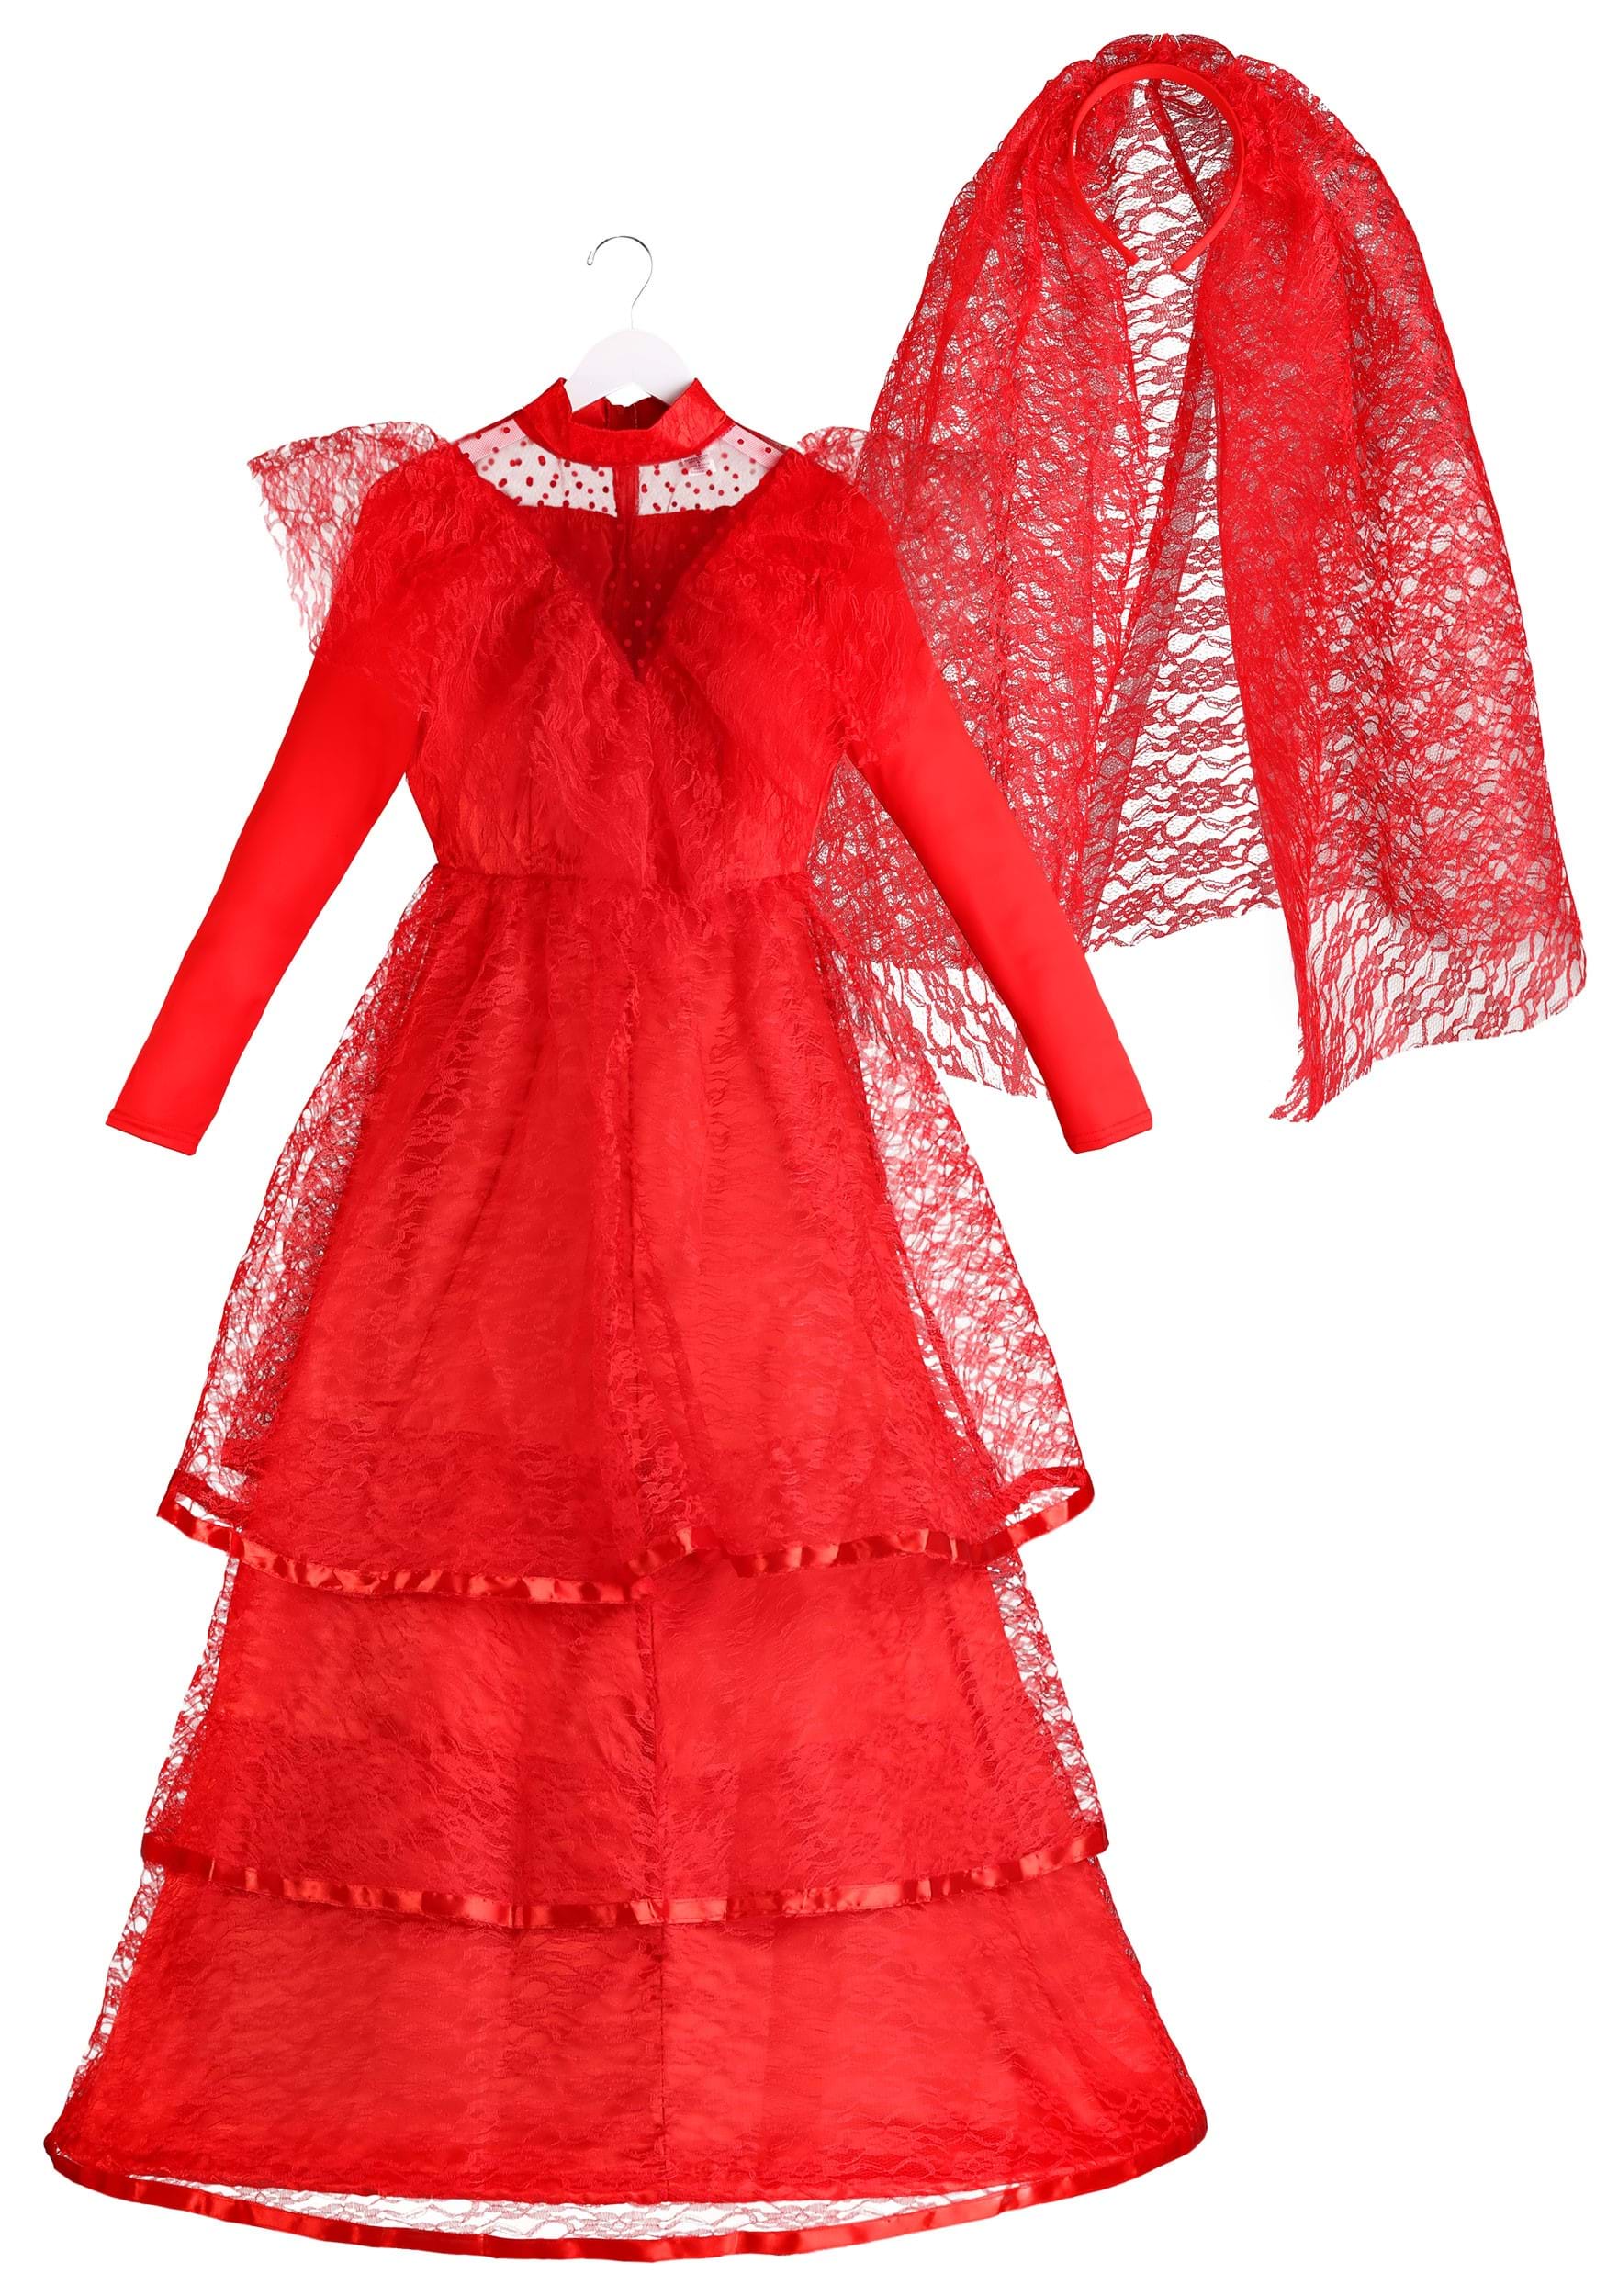 Red Gothic Wedding Dress Fancy Dress Costume